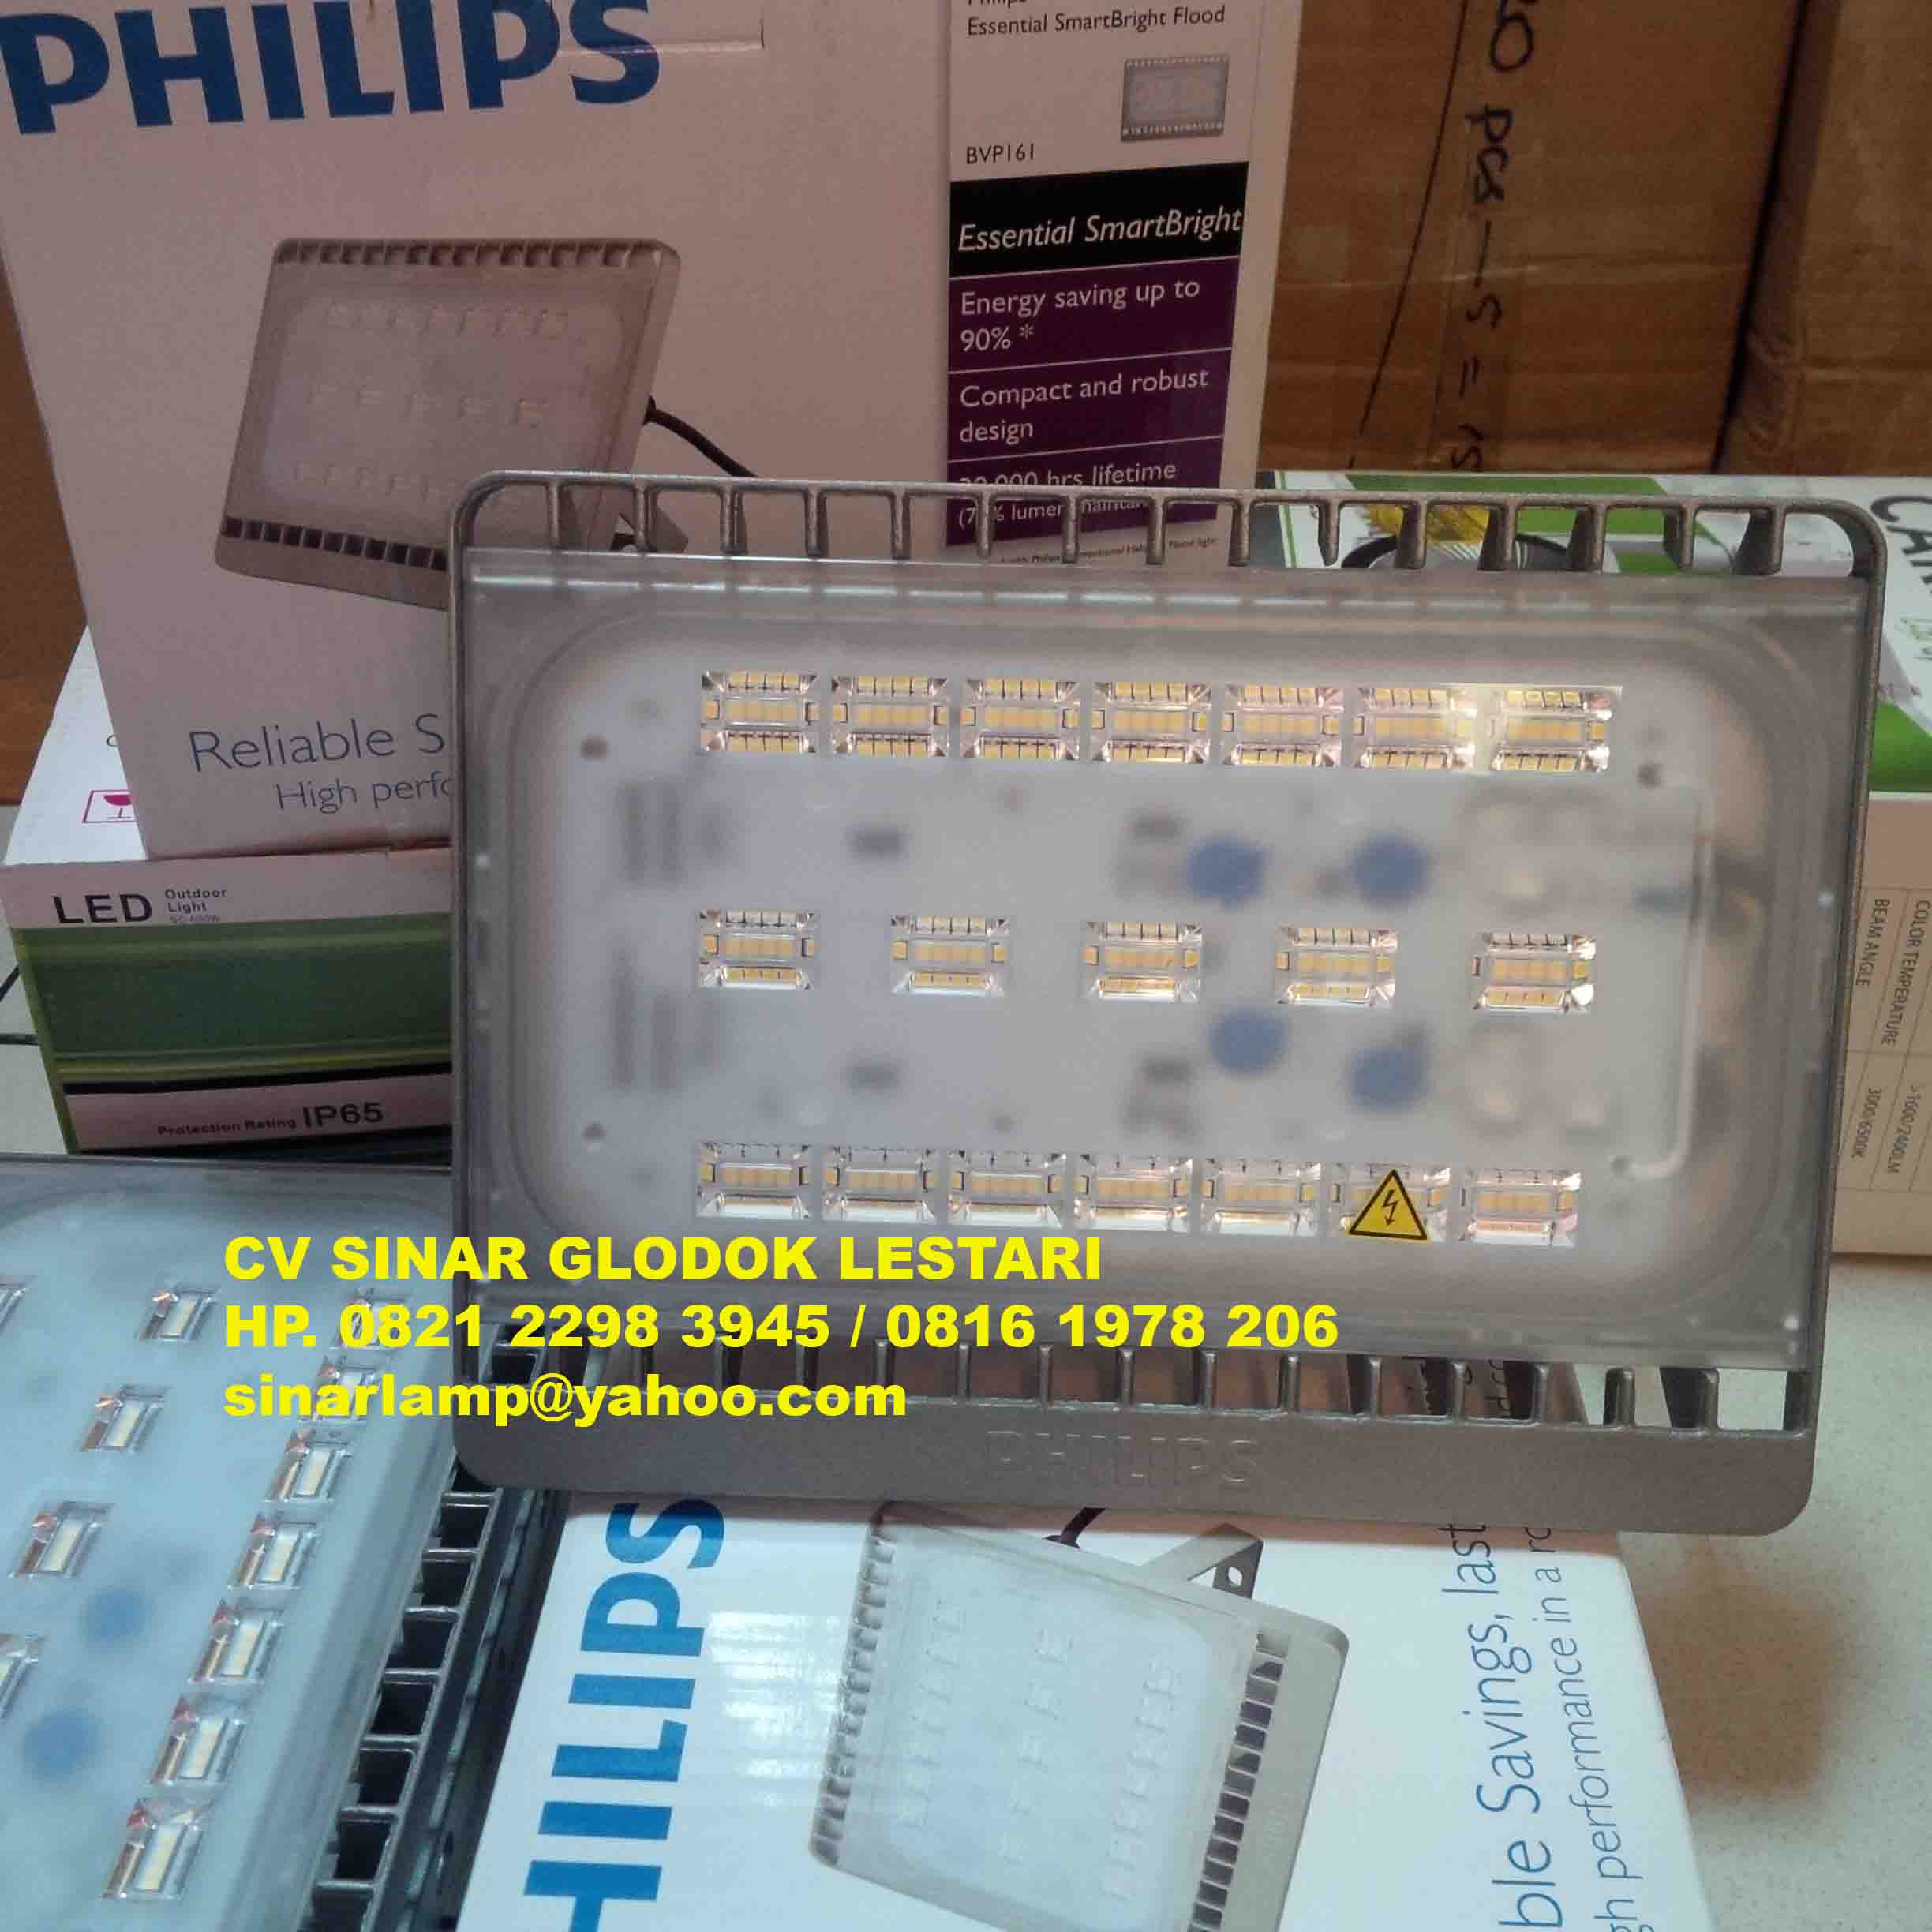 Lampu Sorot Philips BVP161 Essential Smartbright Flood LED 50W